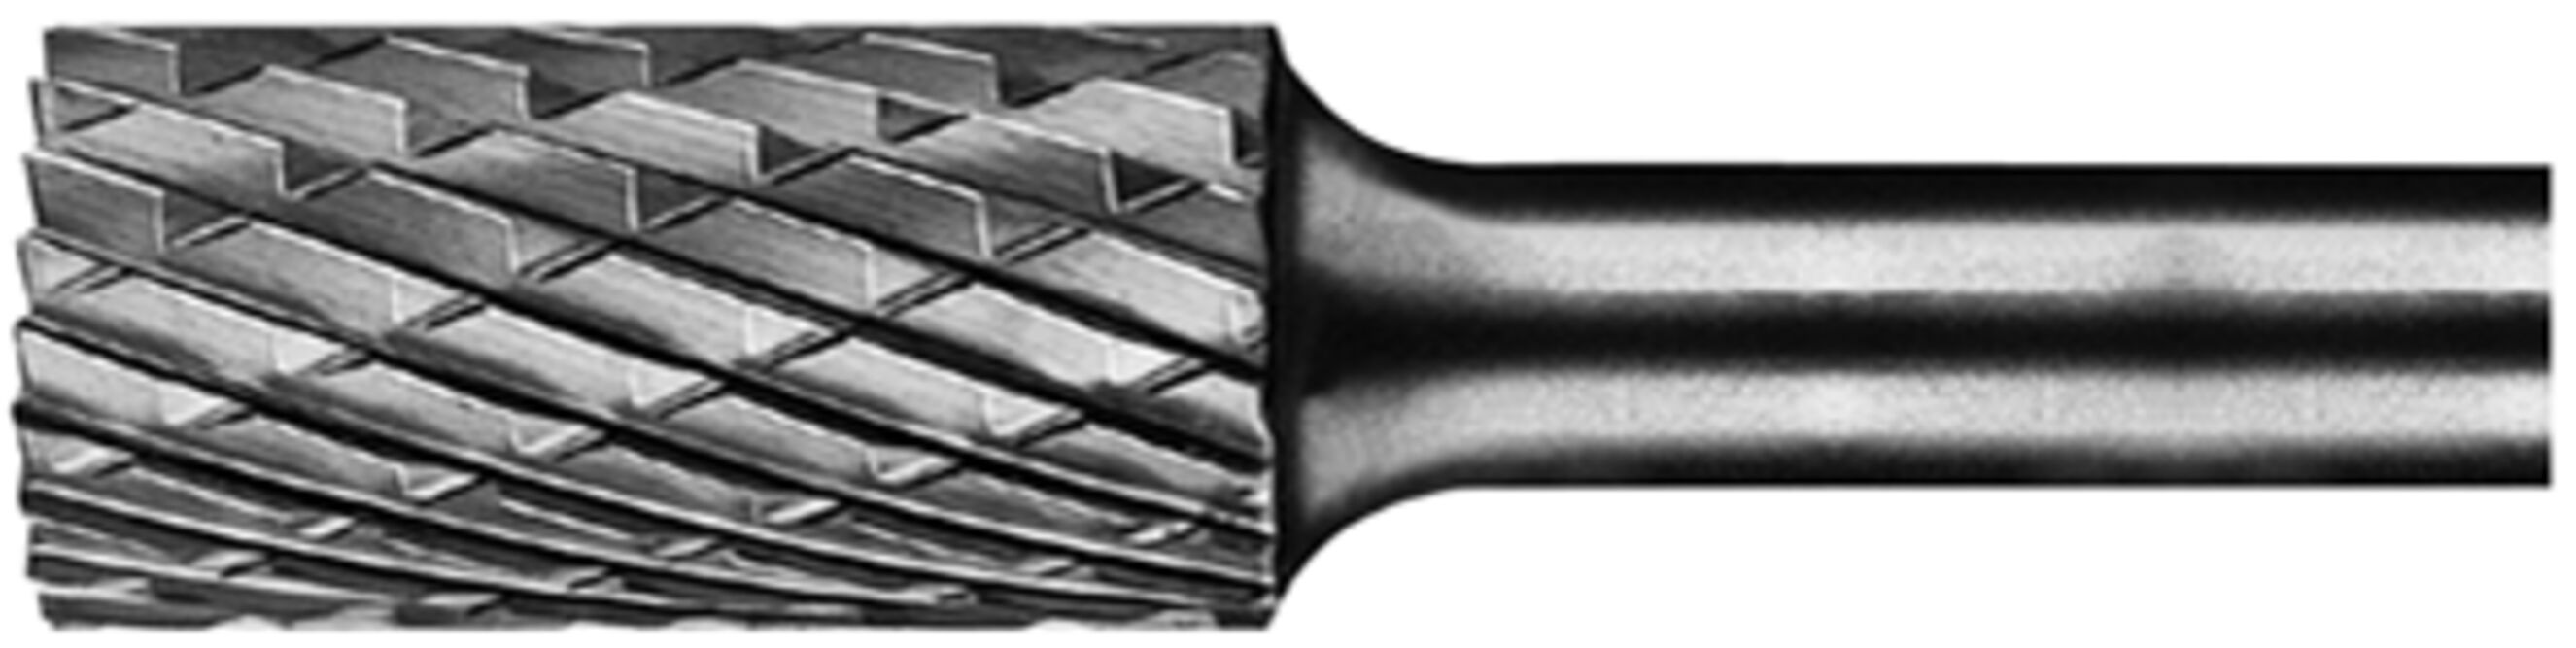 Fraise carbure forme cylindrique zya denture steel